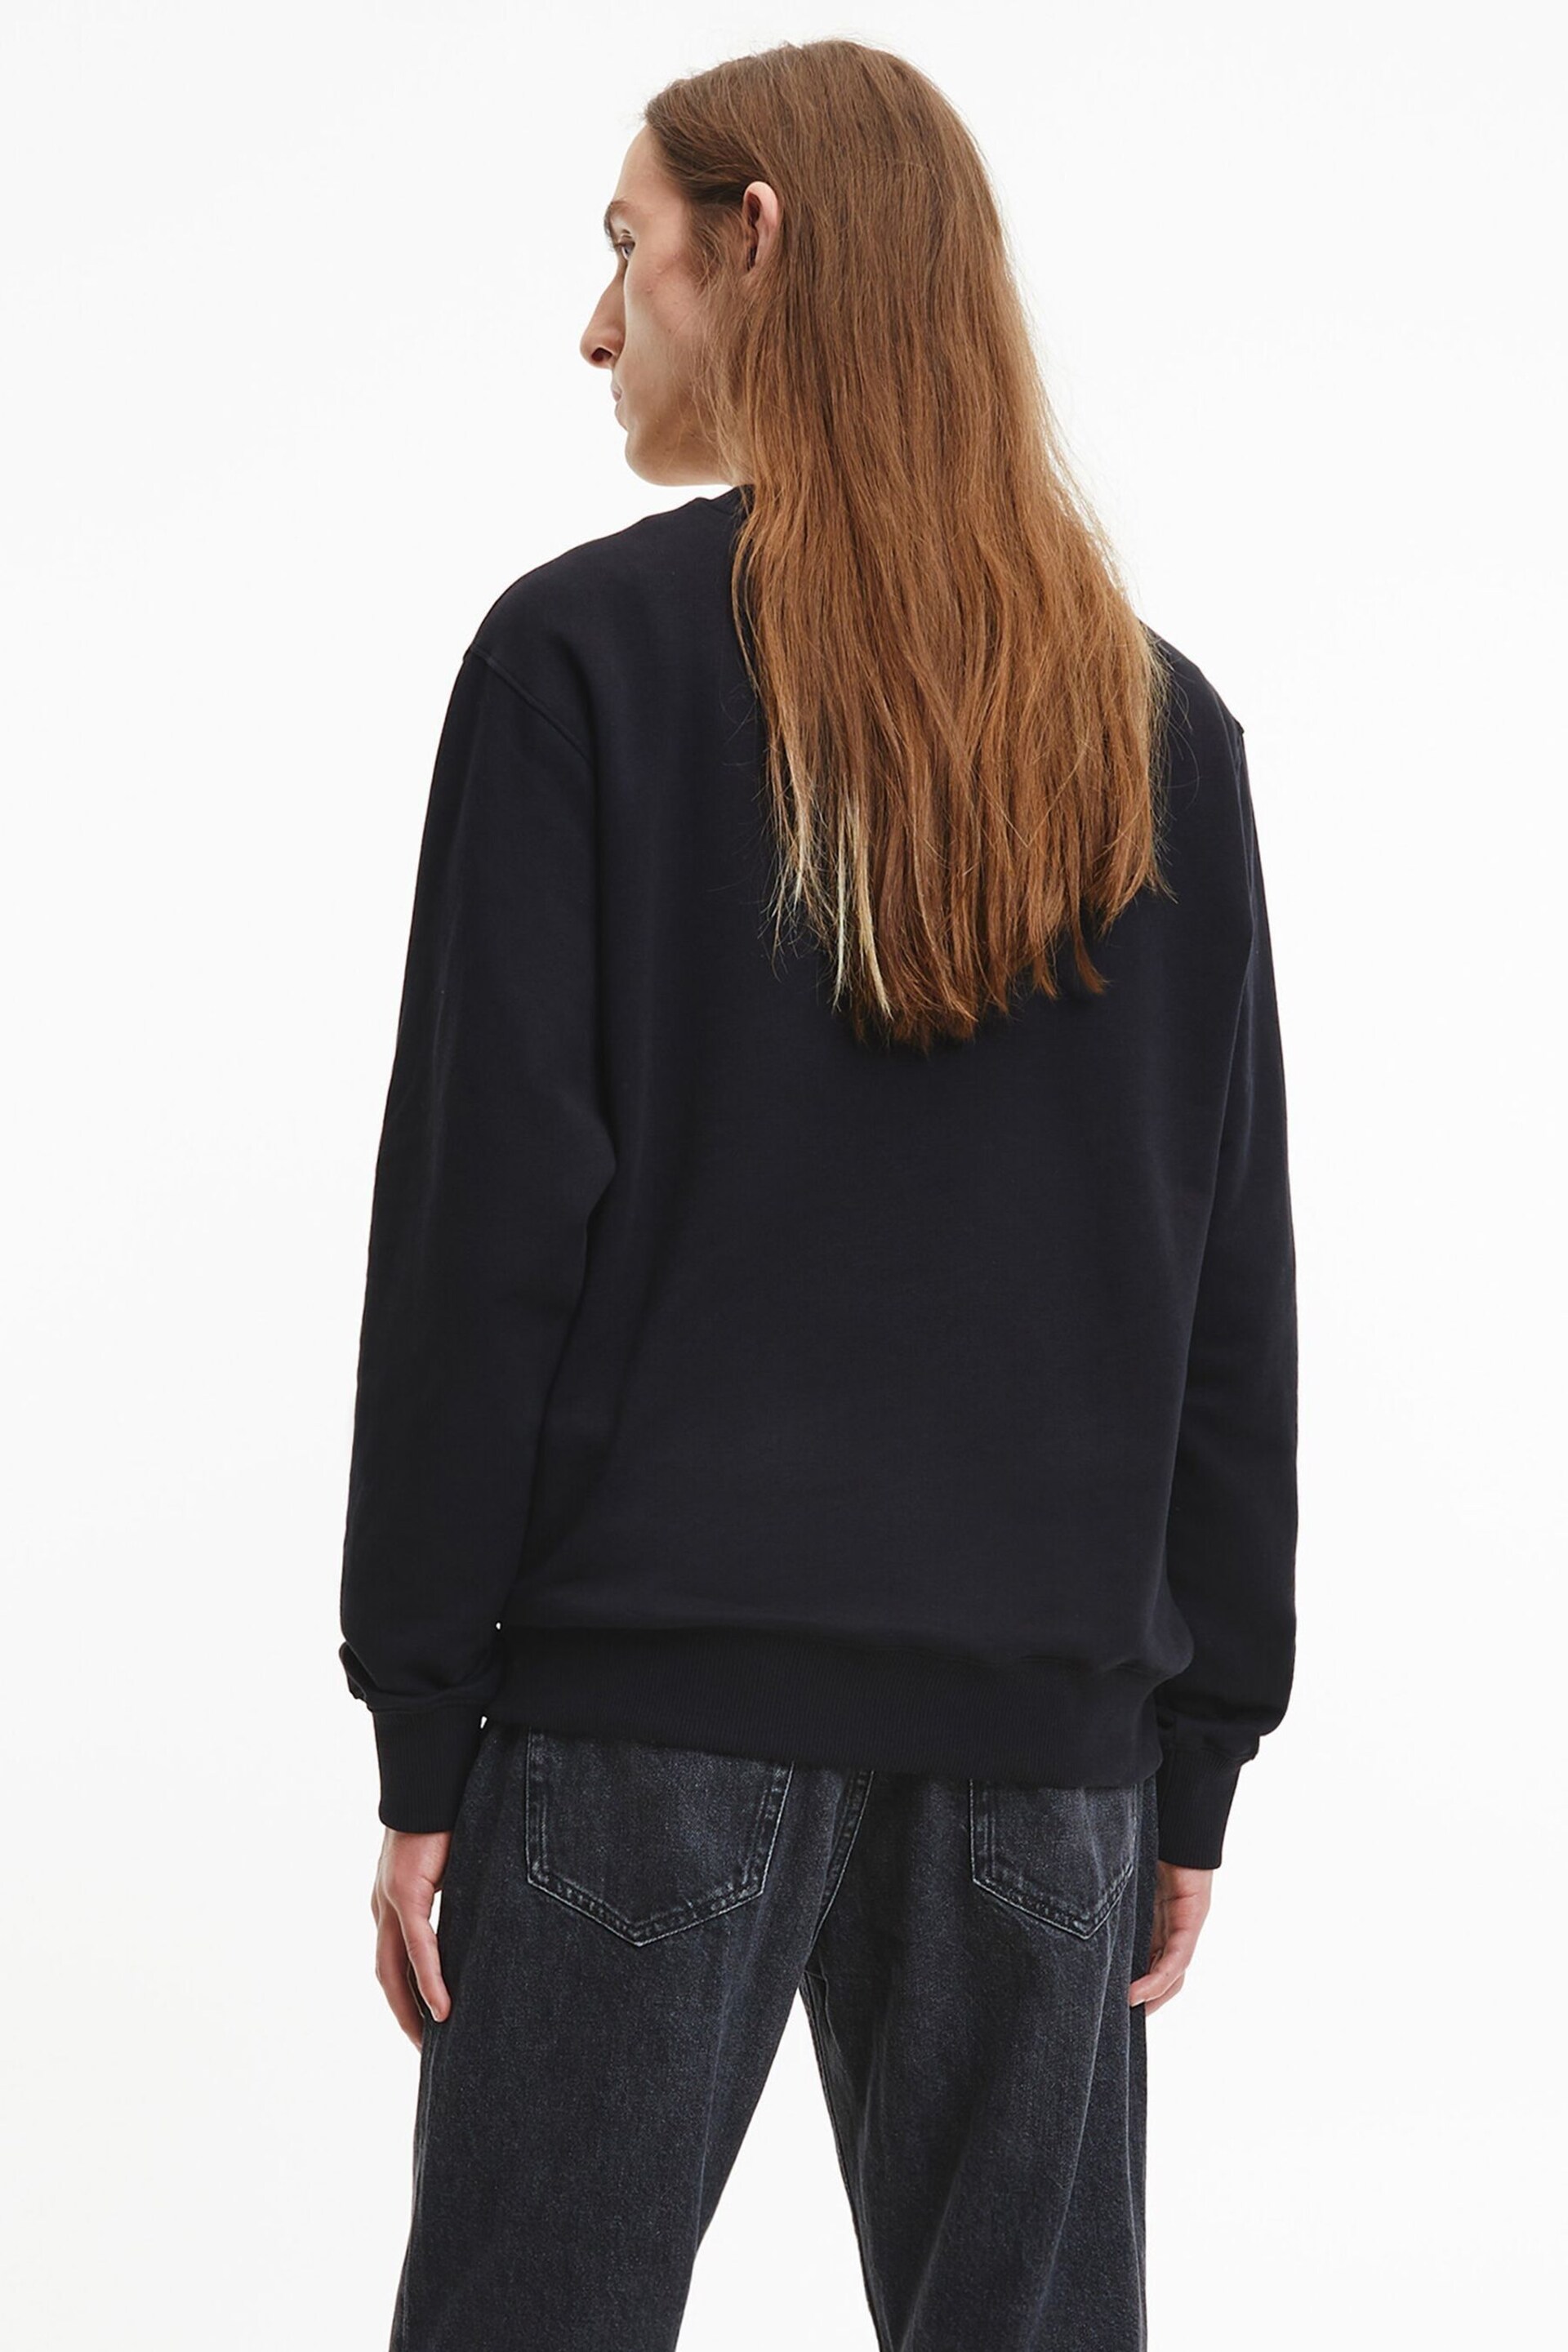 Calvin Klein Black Core Logo Sweatshirt - Image 2 of 5